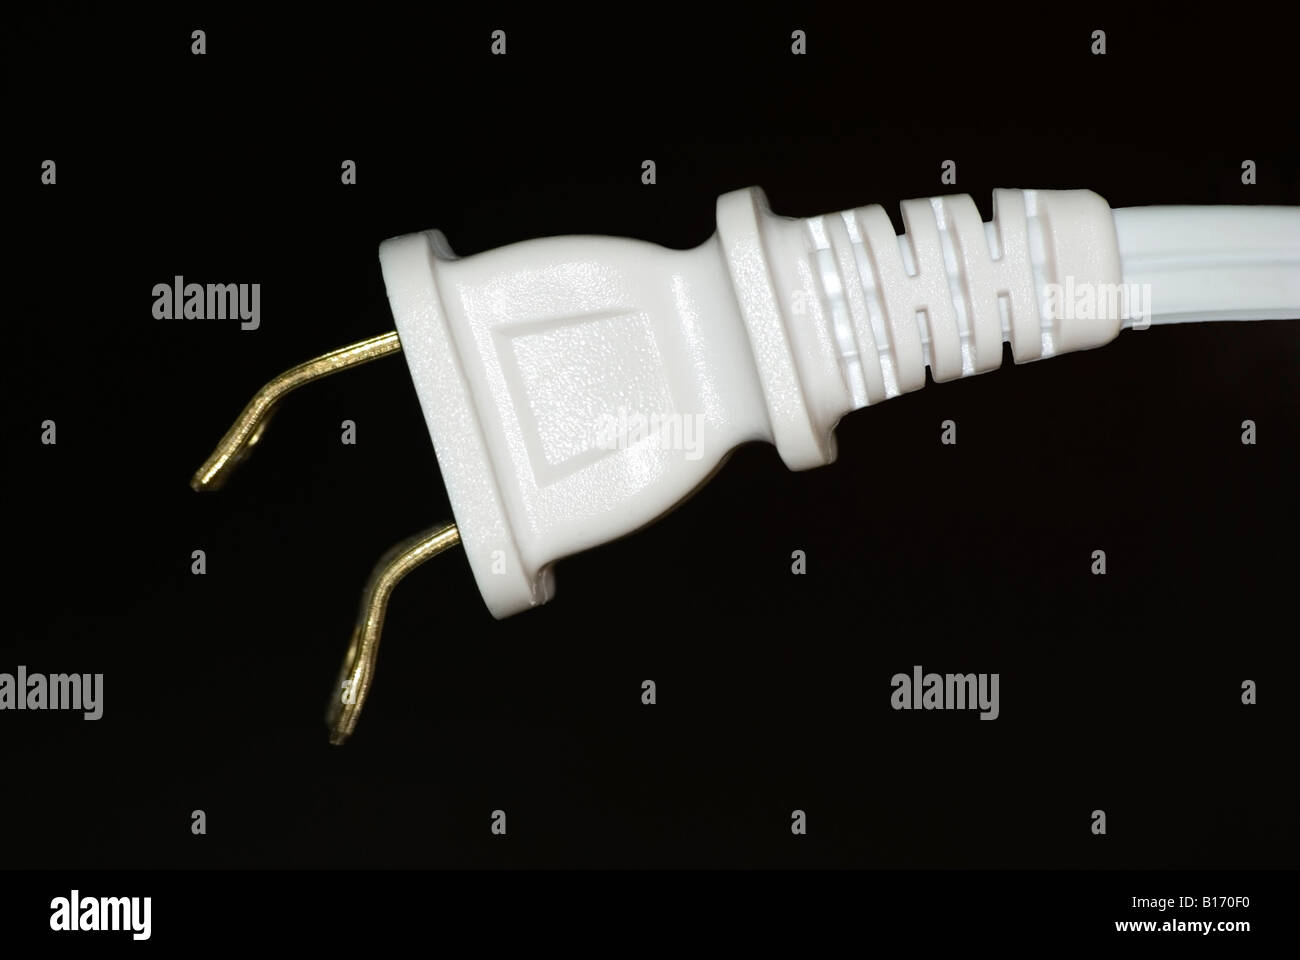 Bent prongs on AC plug Stock Photo - Alamy